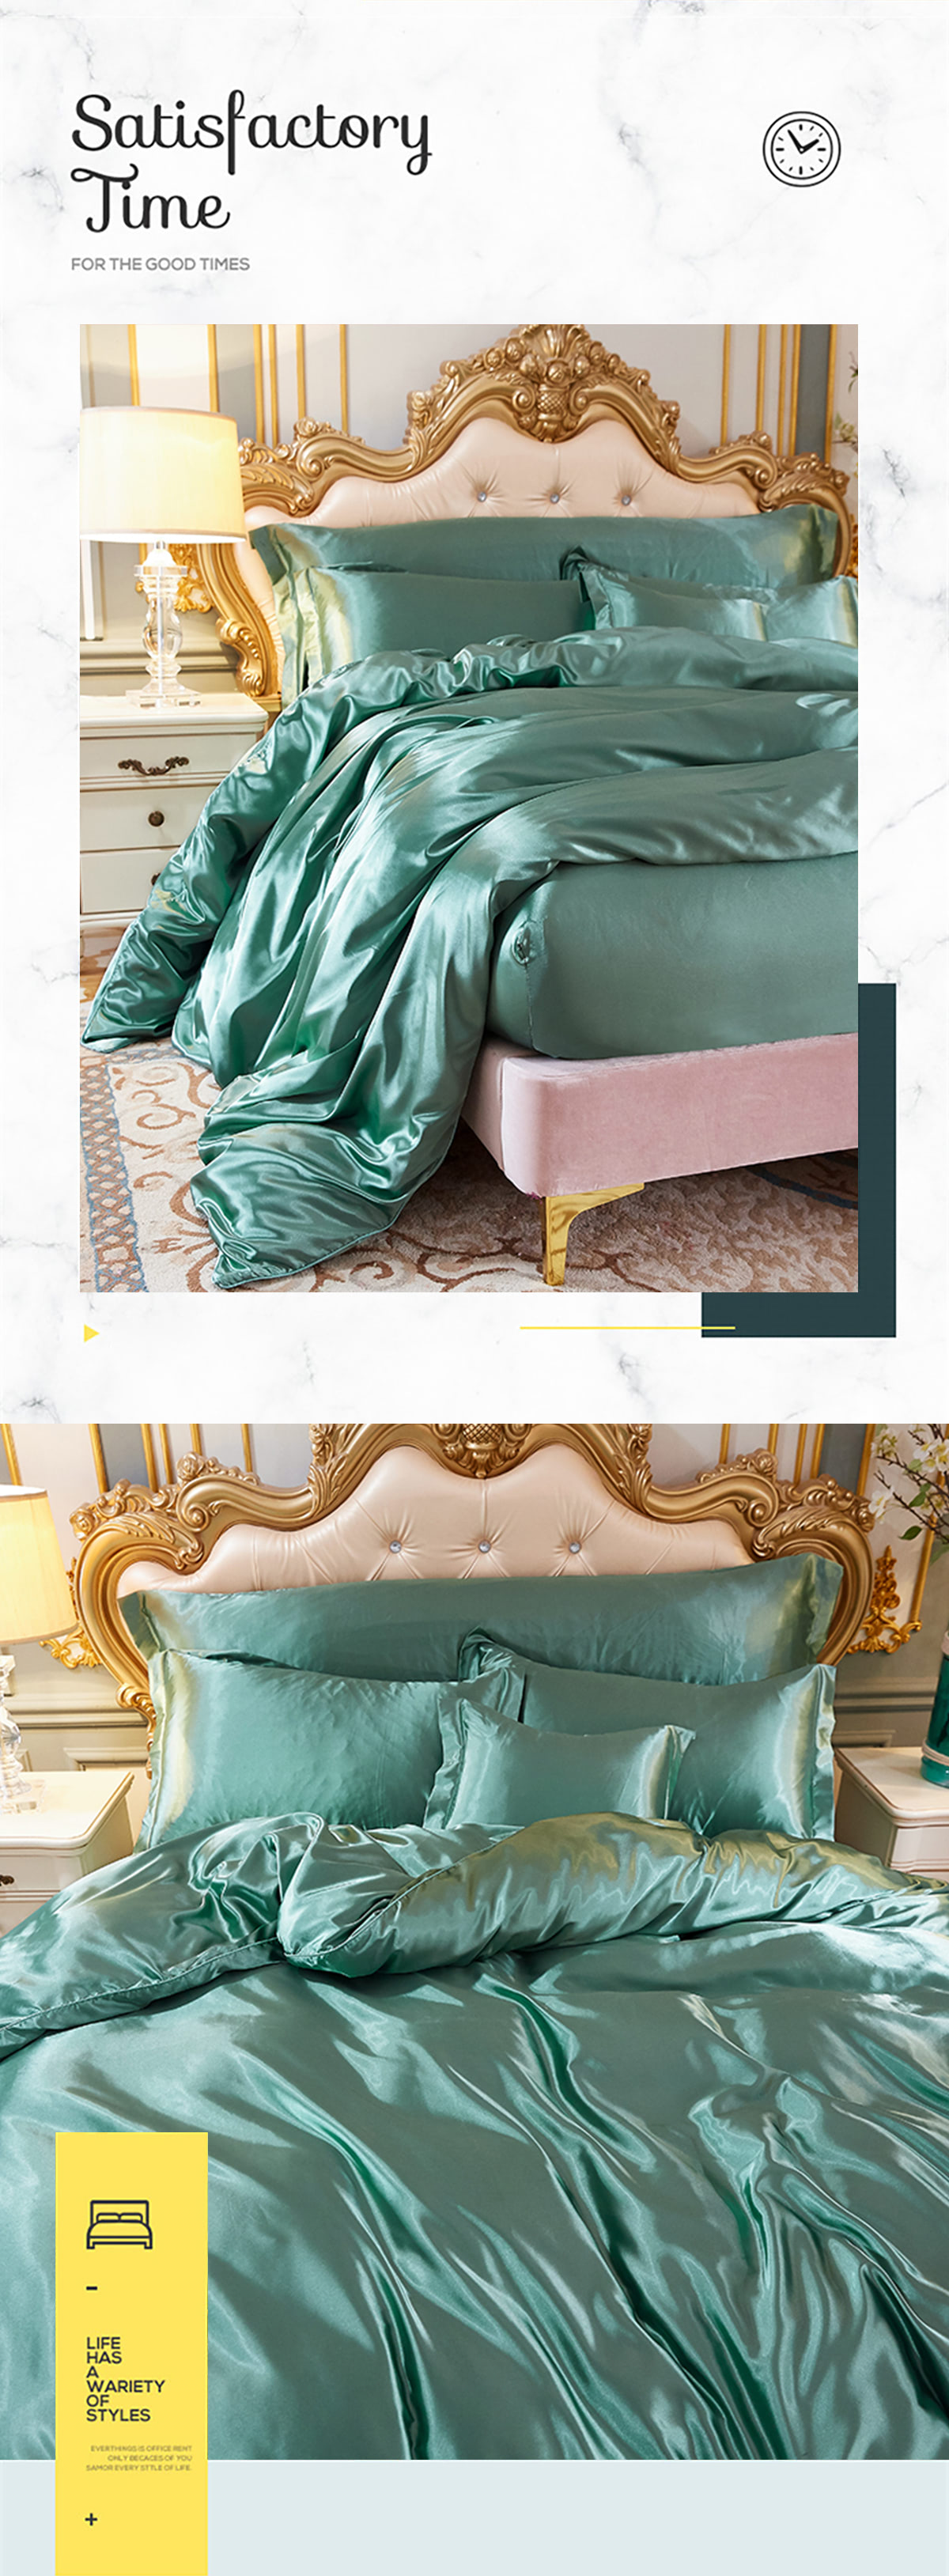 Home-Textile-Satin-Silk-Solid-Color-Duvet-Cover-Sheet-4-Pcs-Set24.jpg